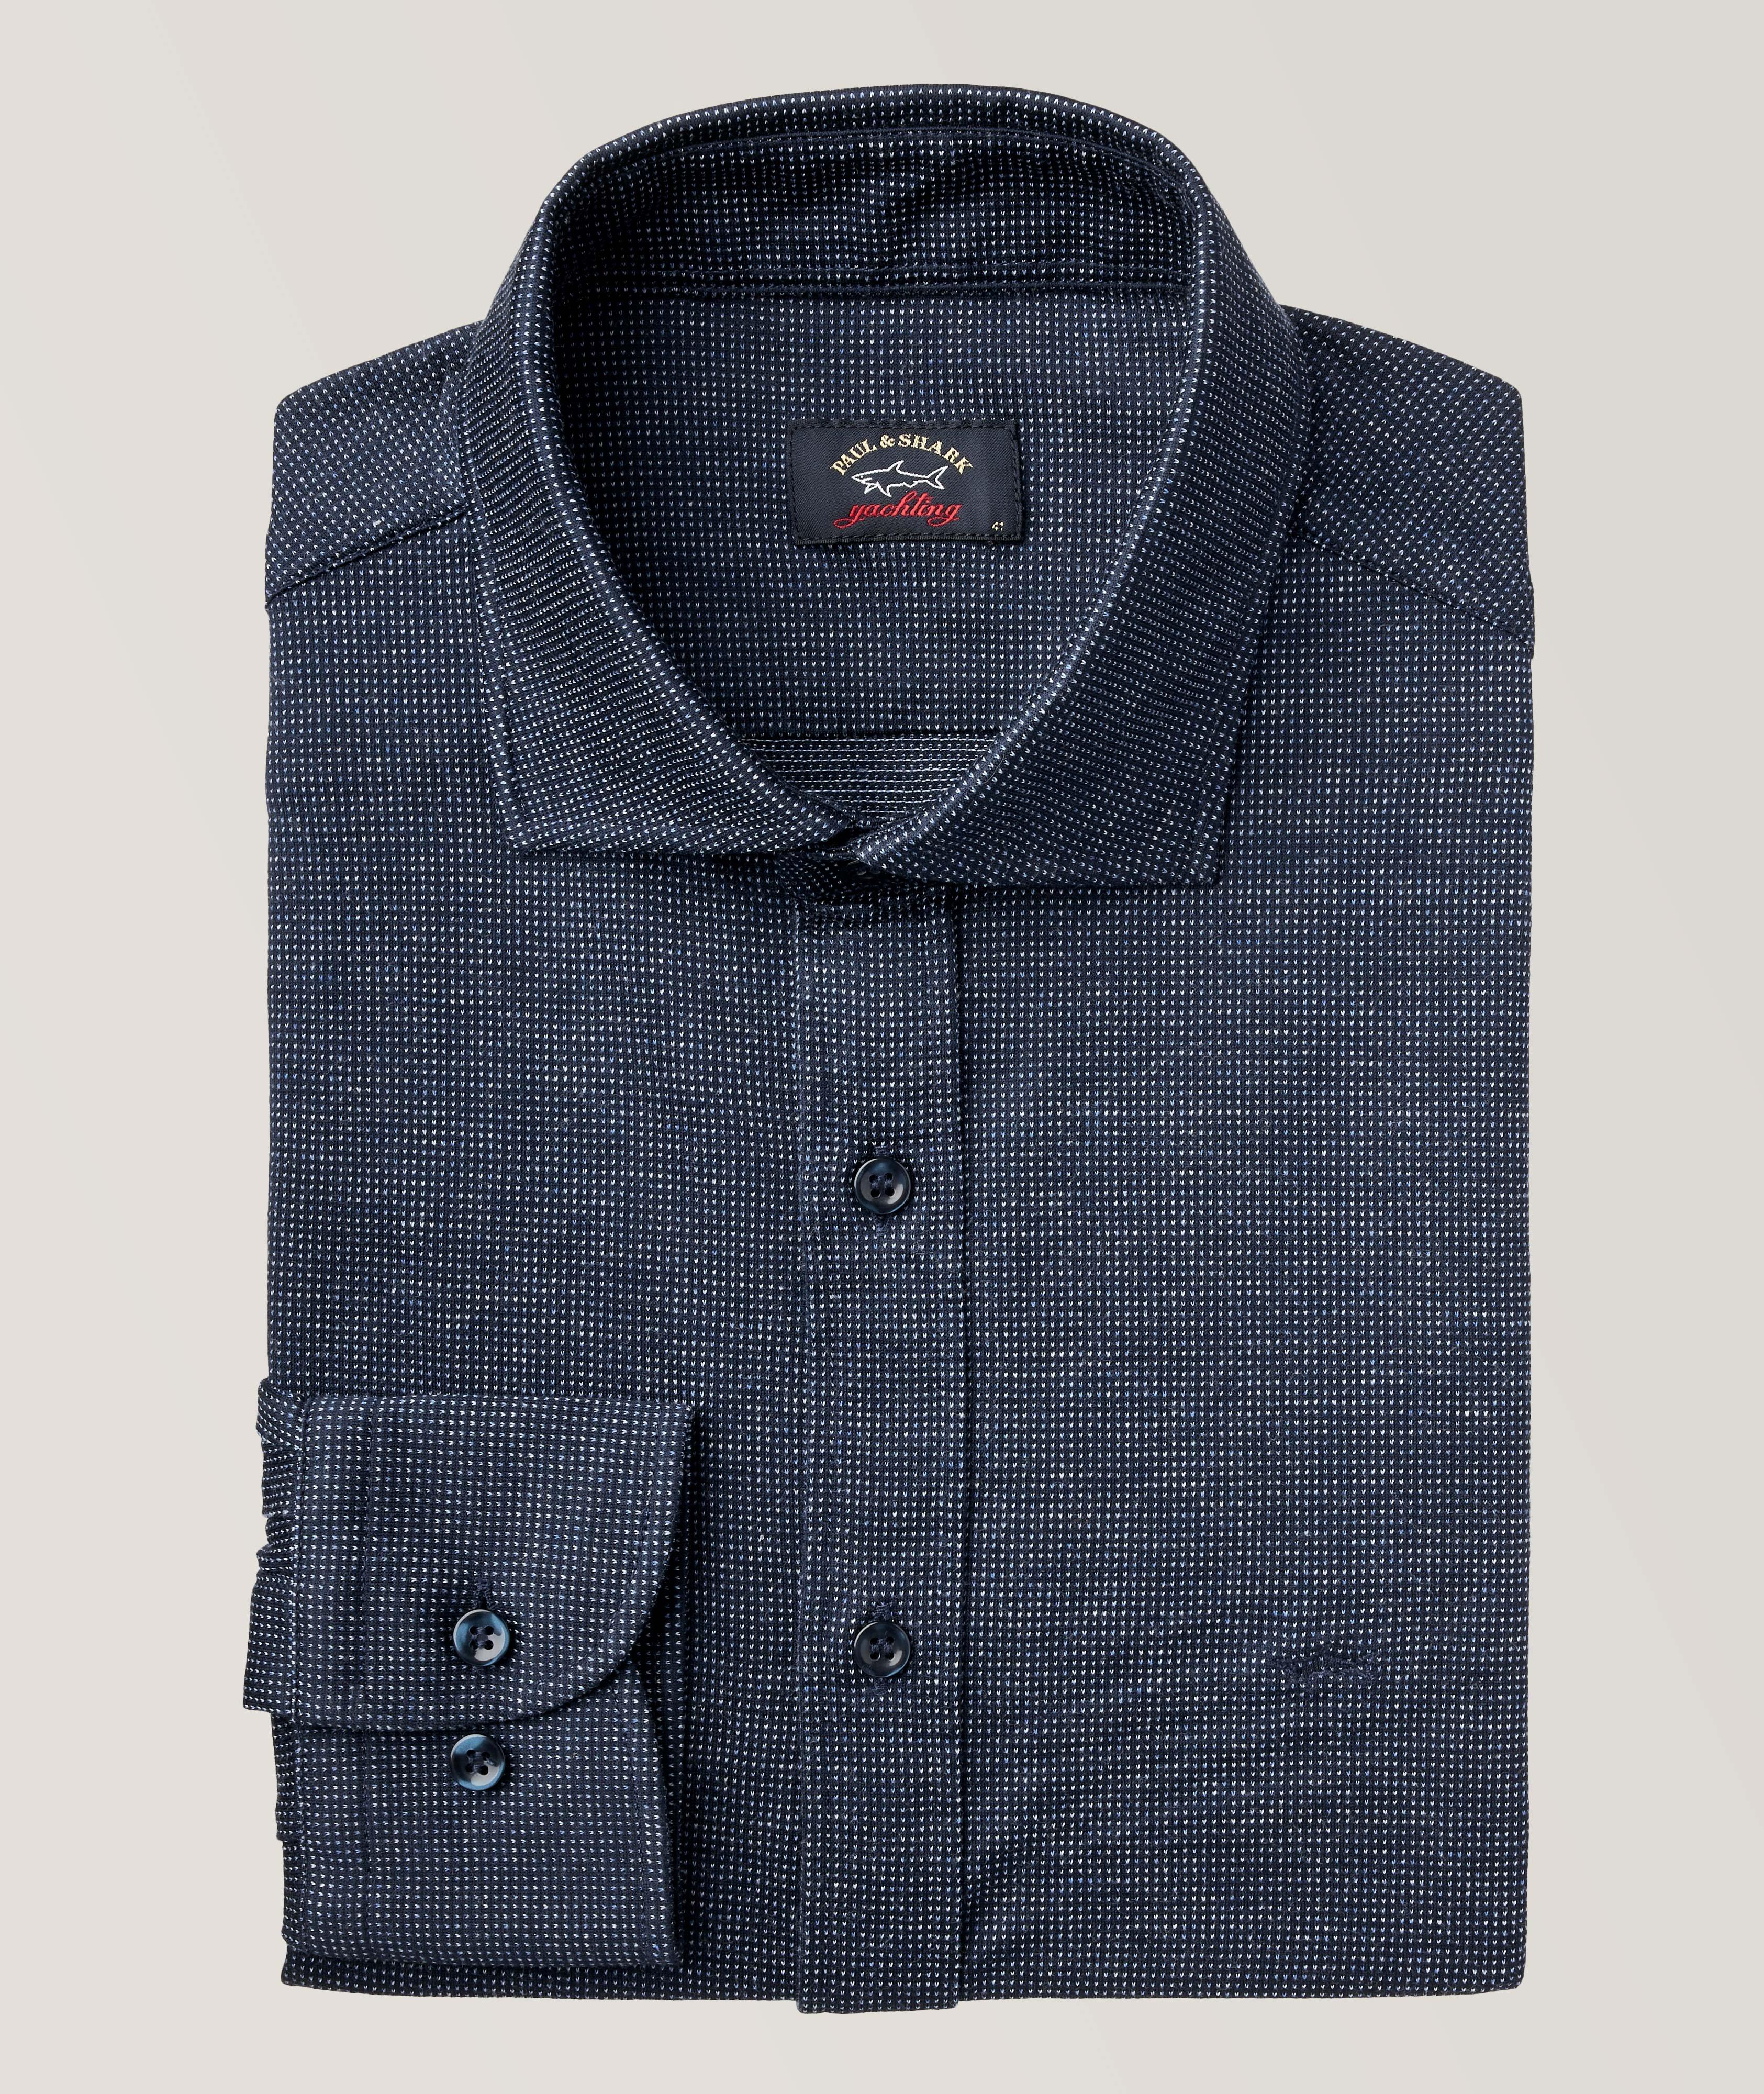 Micro Jacquard Patterned Cotton Sport Shirt image 0